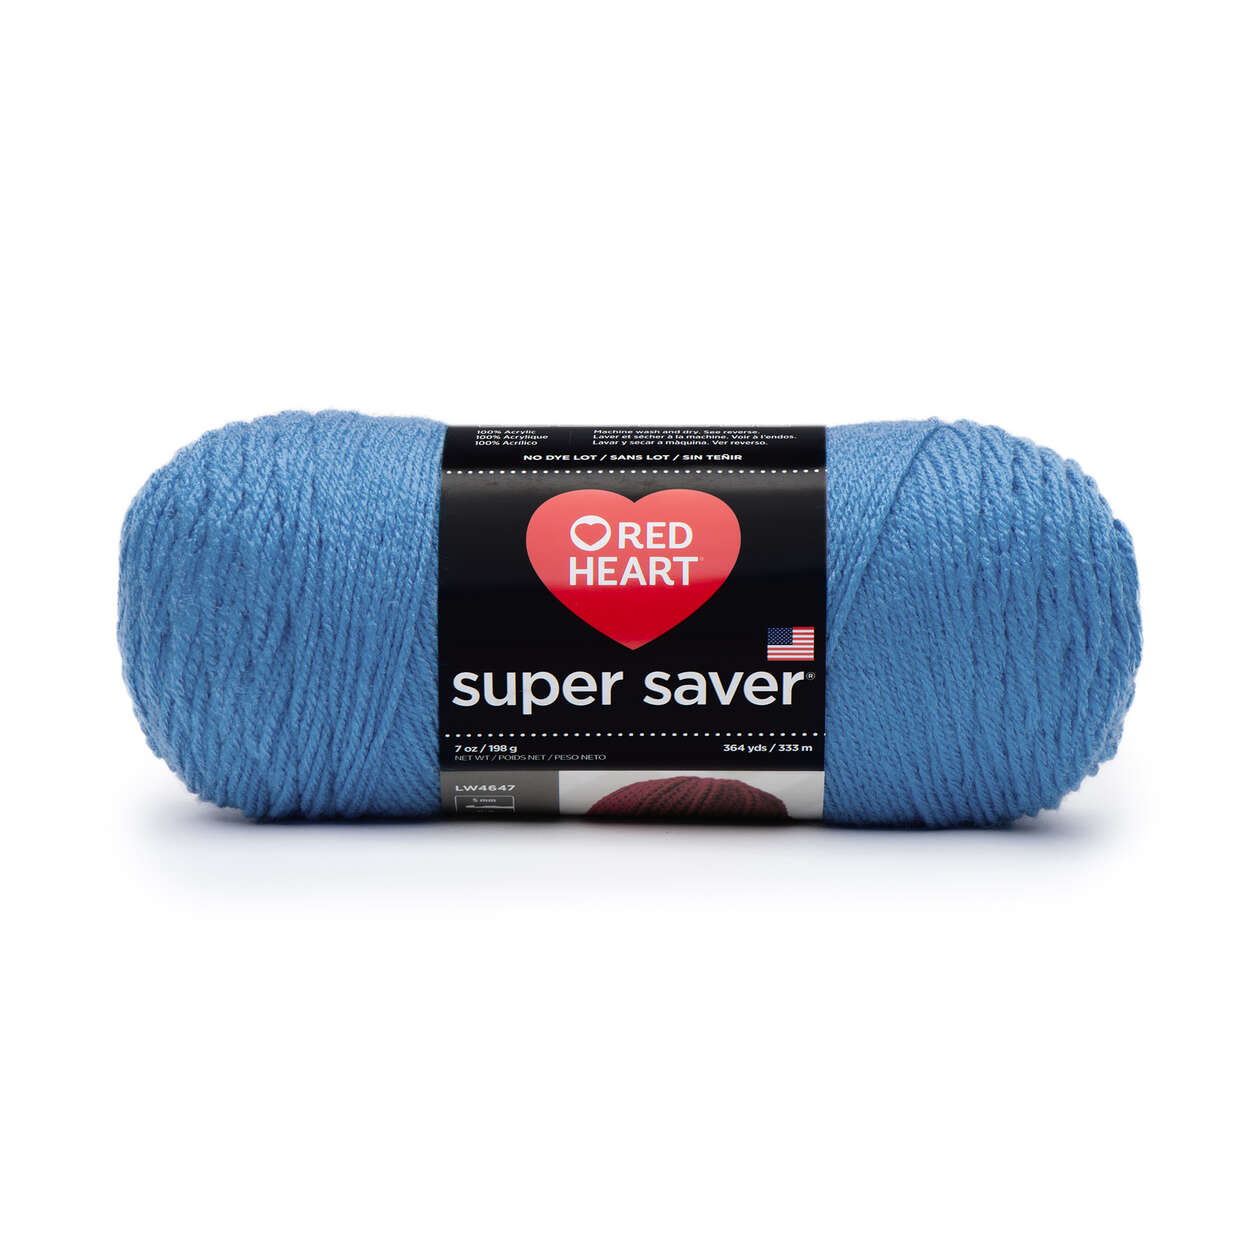 Red Heart Super Saver Yarn Delft Blue